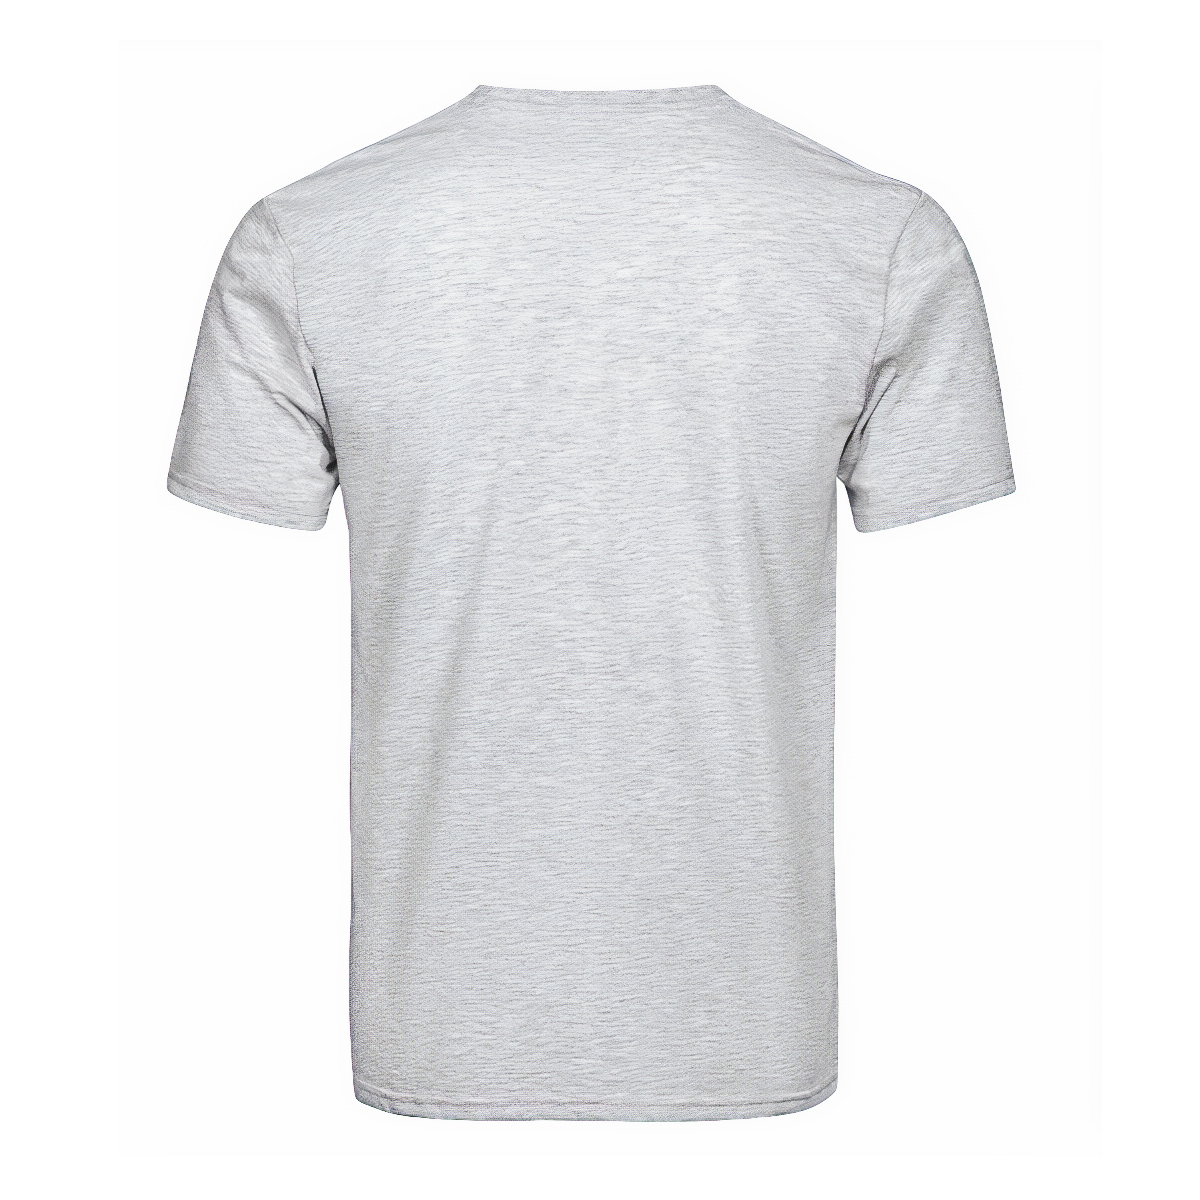 Maxtone Tartan Crest T-shirt - I'm not yelling style